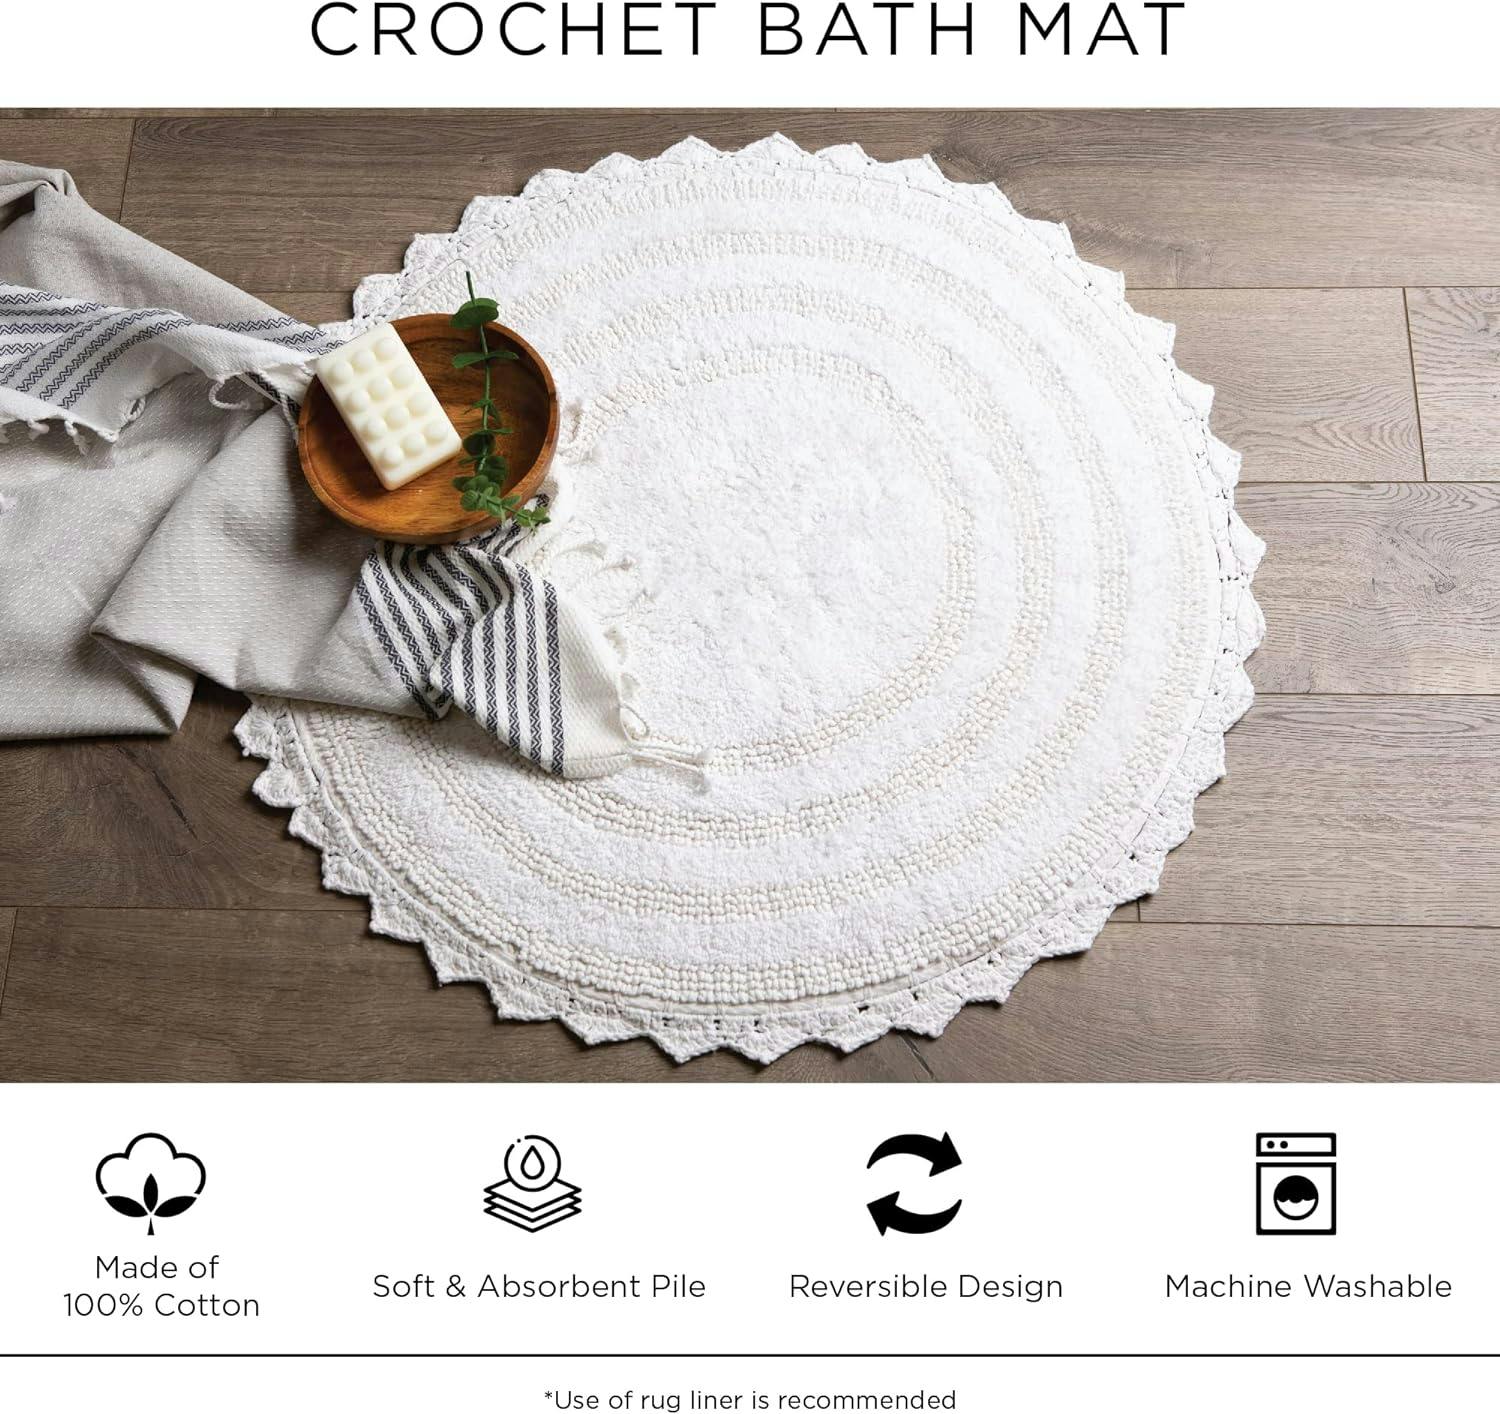 Plush Cotton 28" Yellow Round Crochet Bath Mat